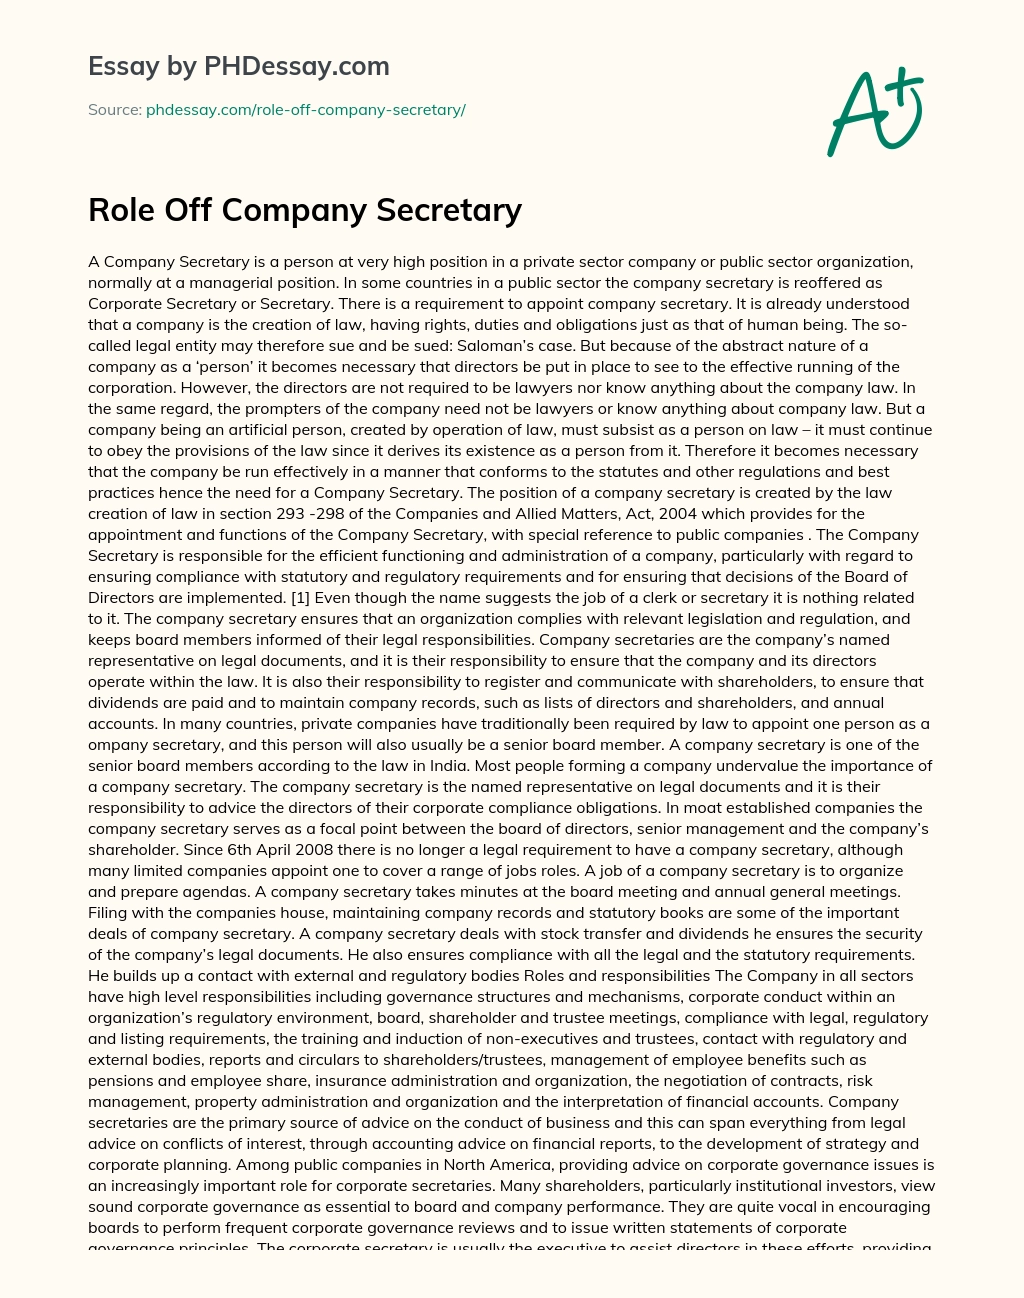 Role Off Company Secretary essay